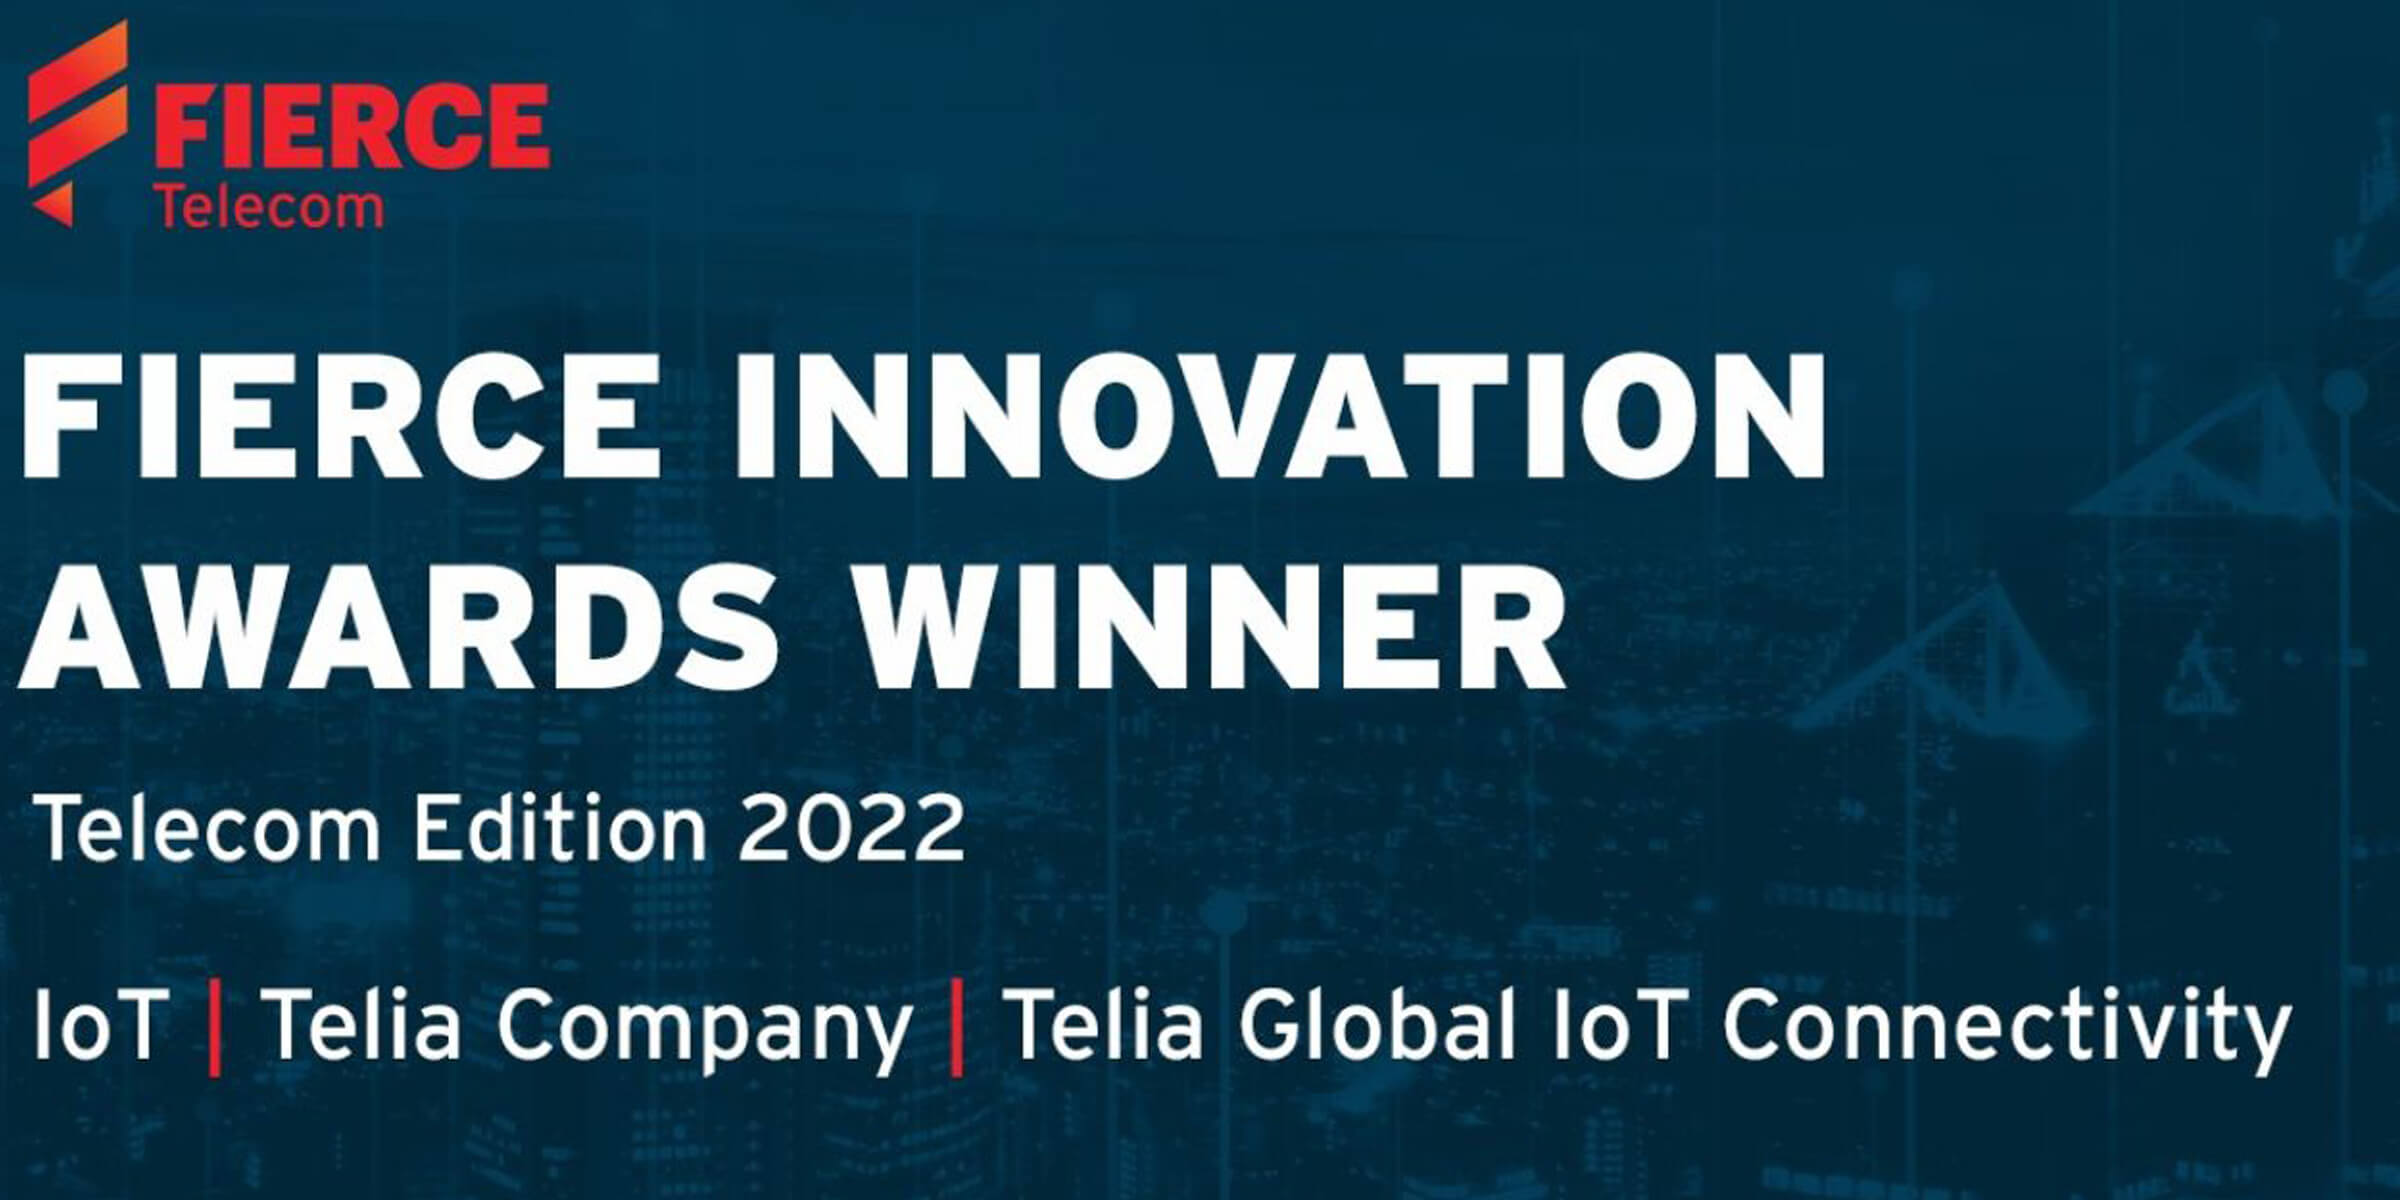 Telia is Fierce Innovation Awards Winner in 2022 - Telia Global IoT Connectivity